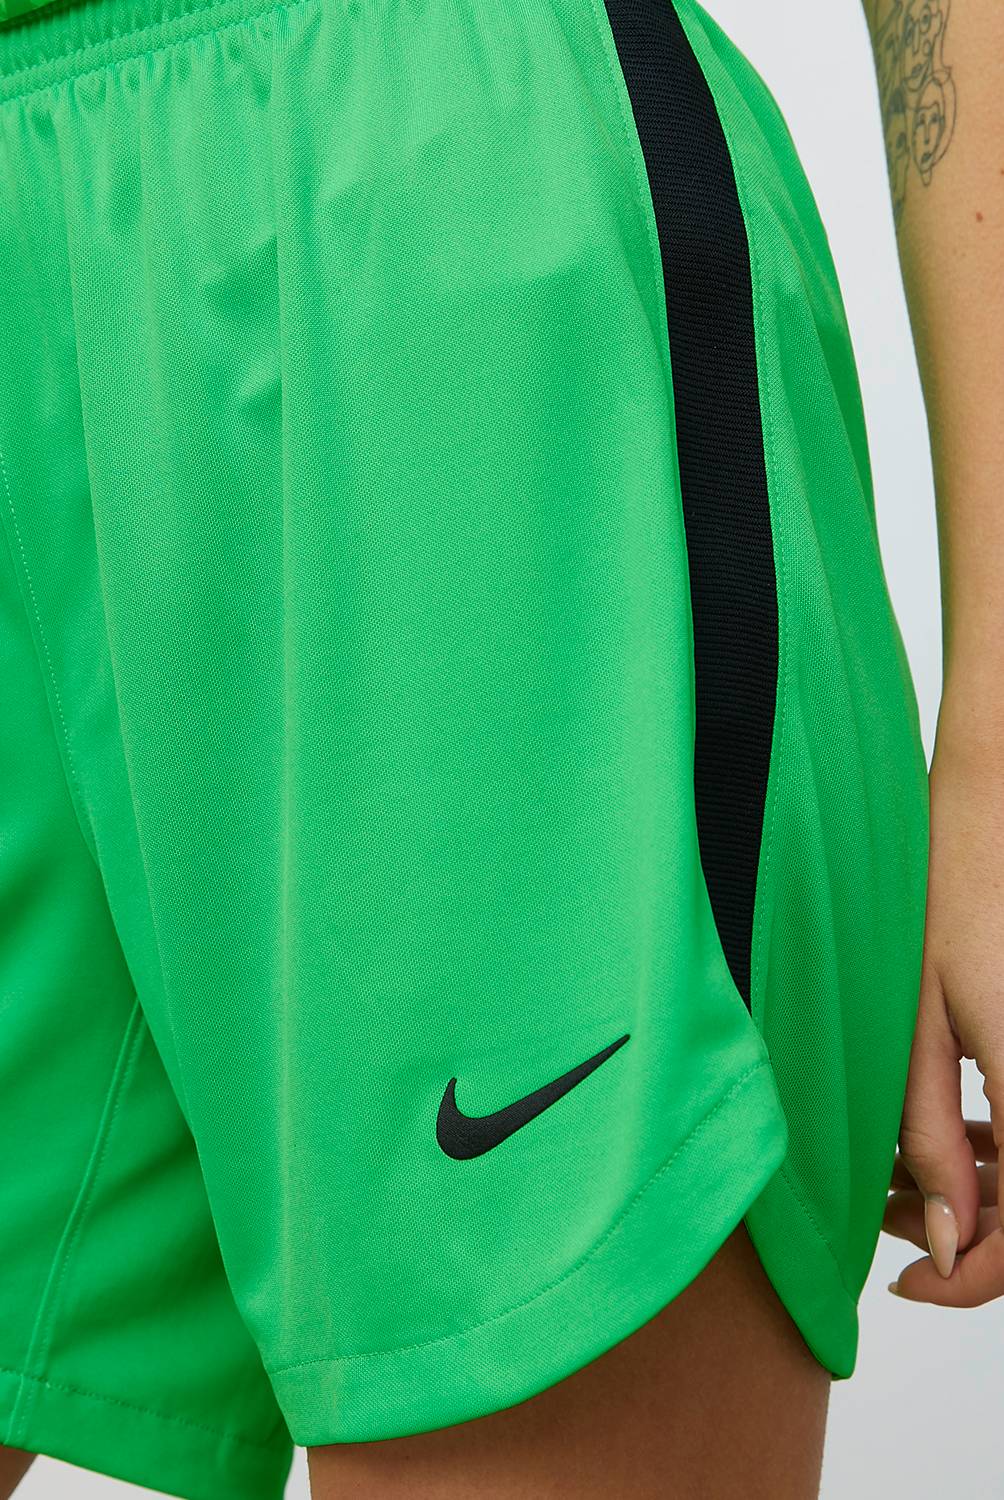 NIKE - Nike Shorts Deportivo Fútbol Mujer